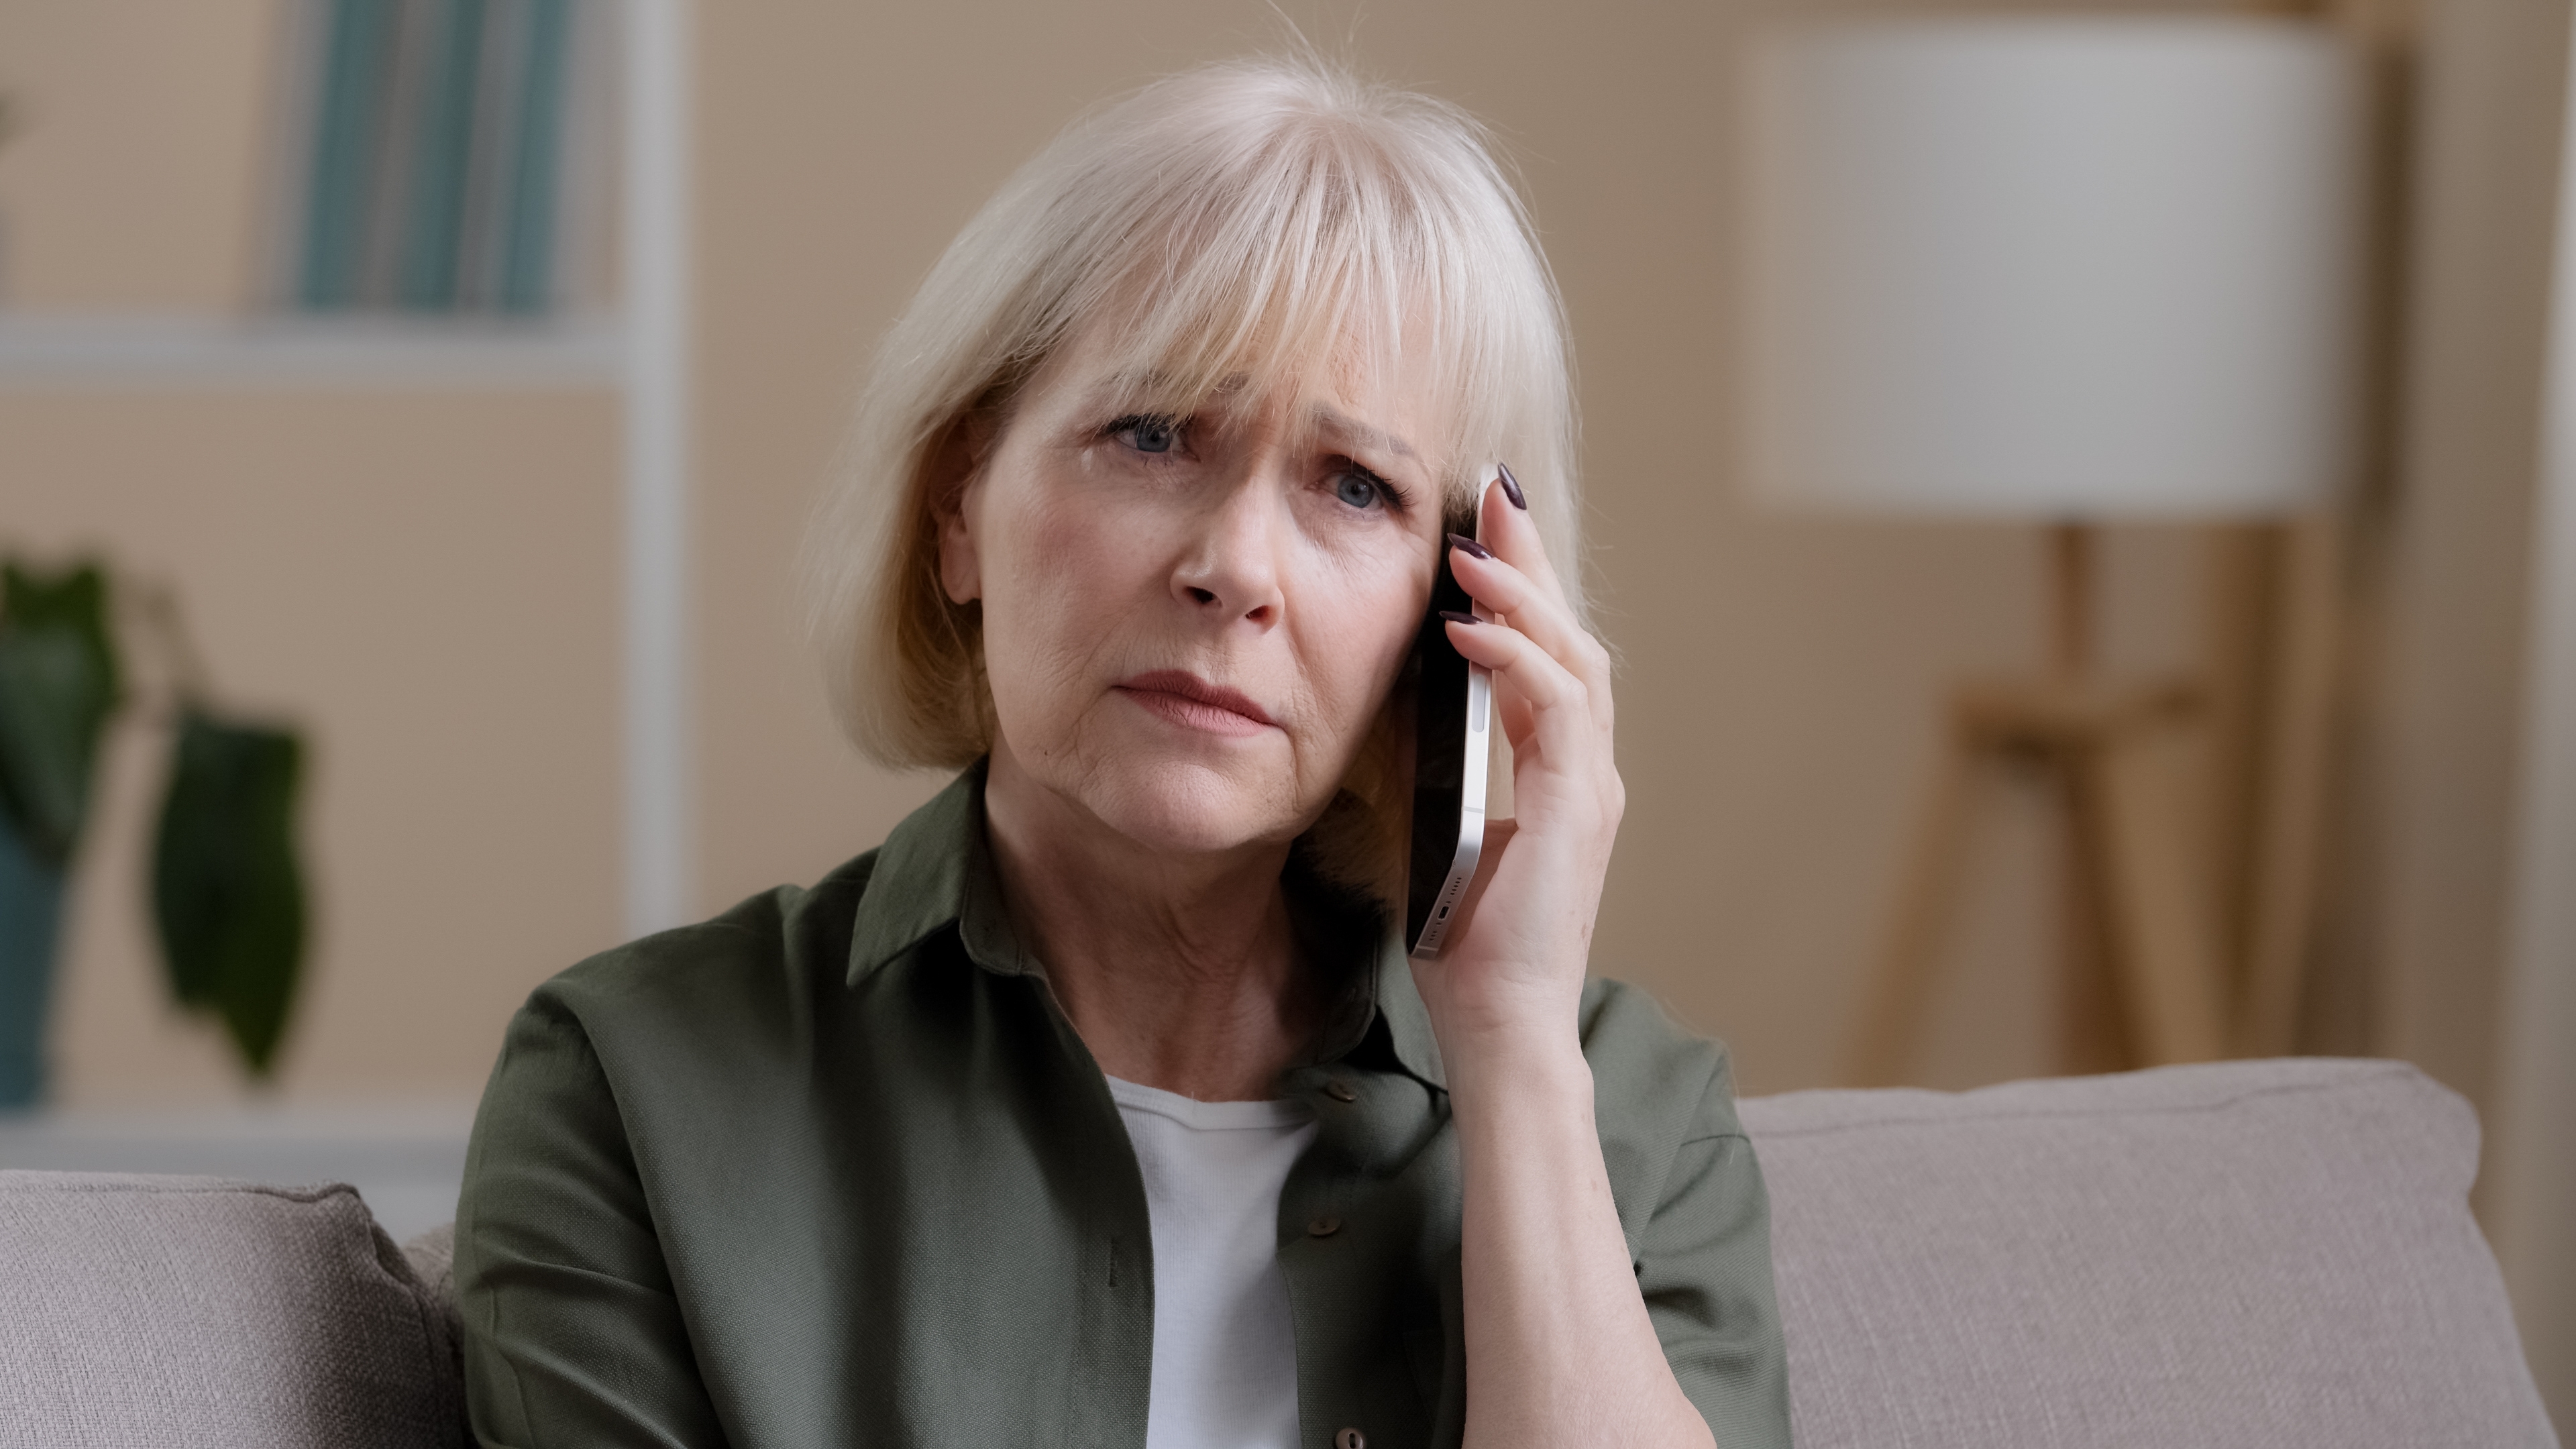 A worried senior woman talking on her phone | Source: Shutterstock